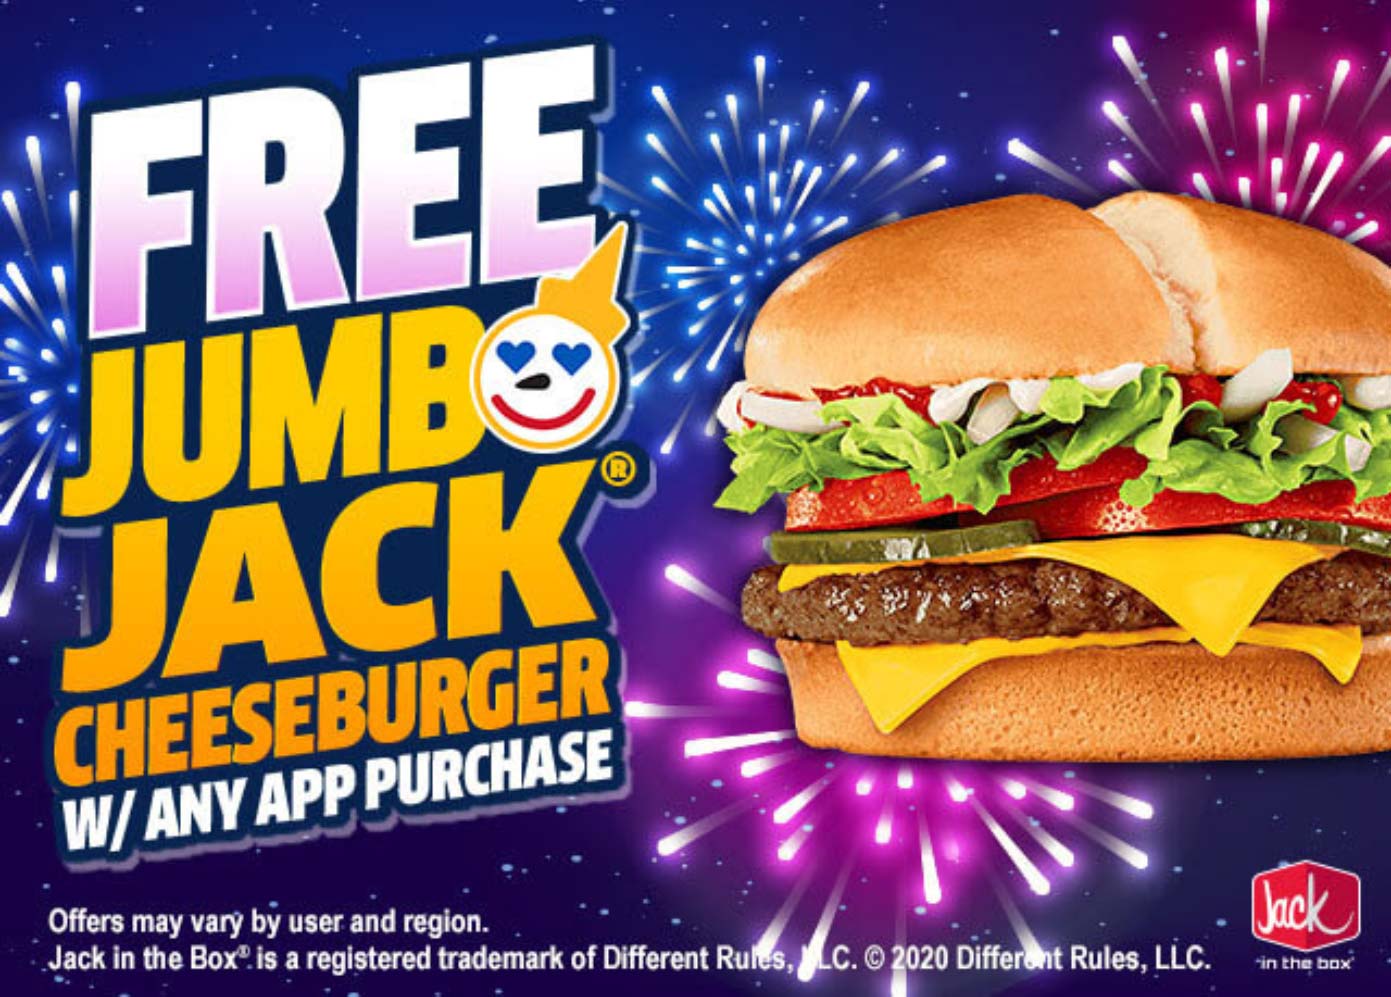 Jack in the Box restaurants Coupon  Free jumbo jack cheeseburger today at Jack in the Box via app #jackinthebox 